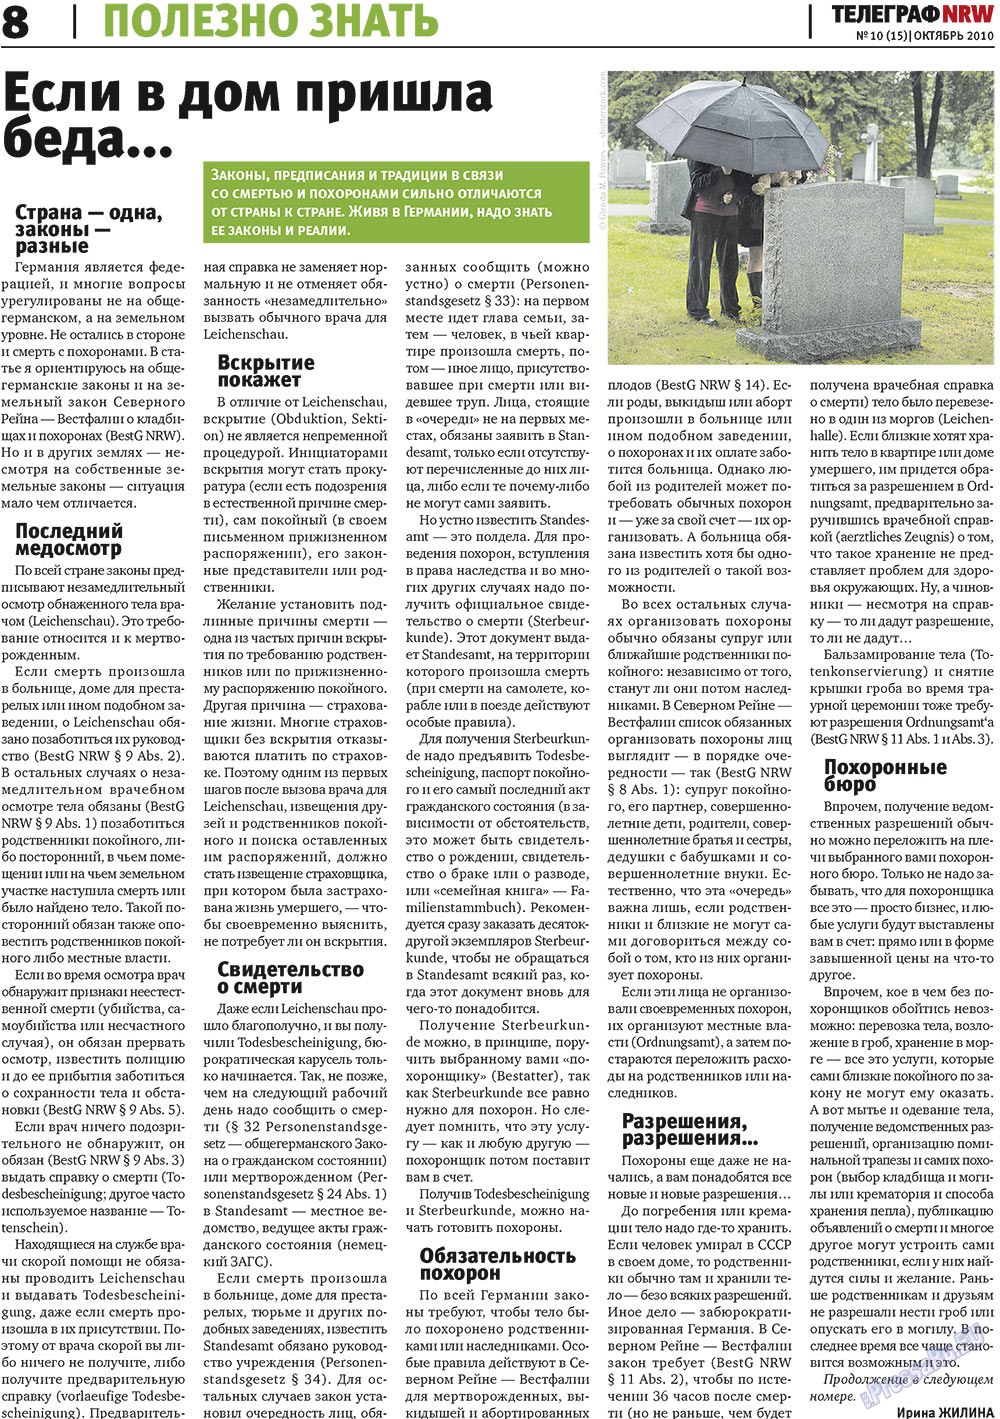 Телеграф NRW, газета. 2010 №10 стр.8